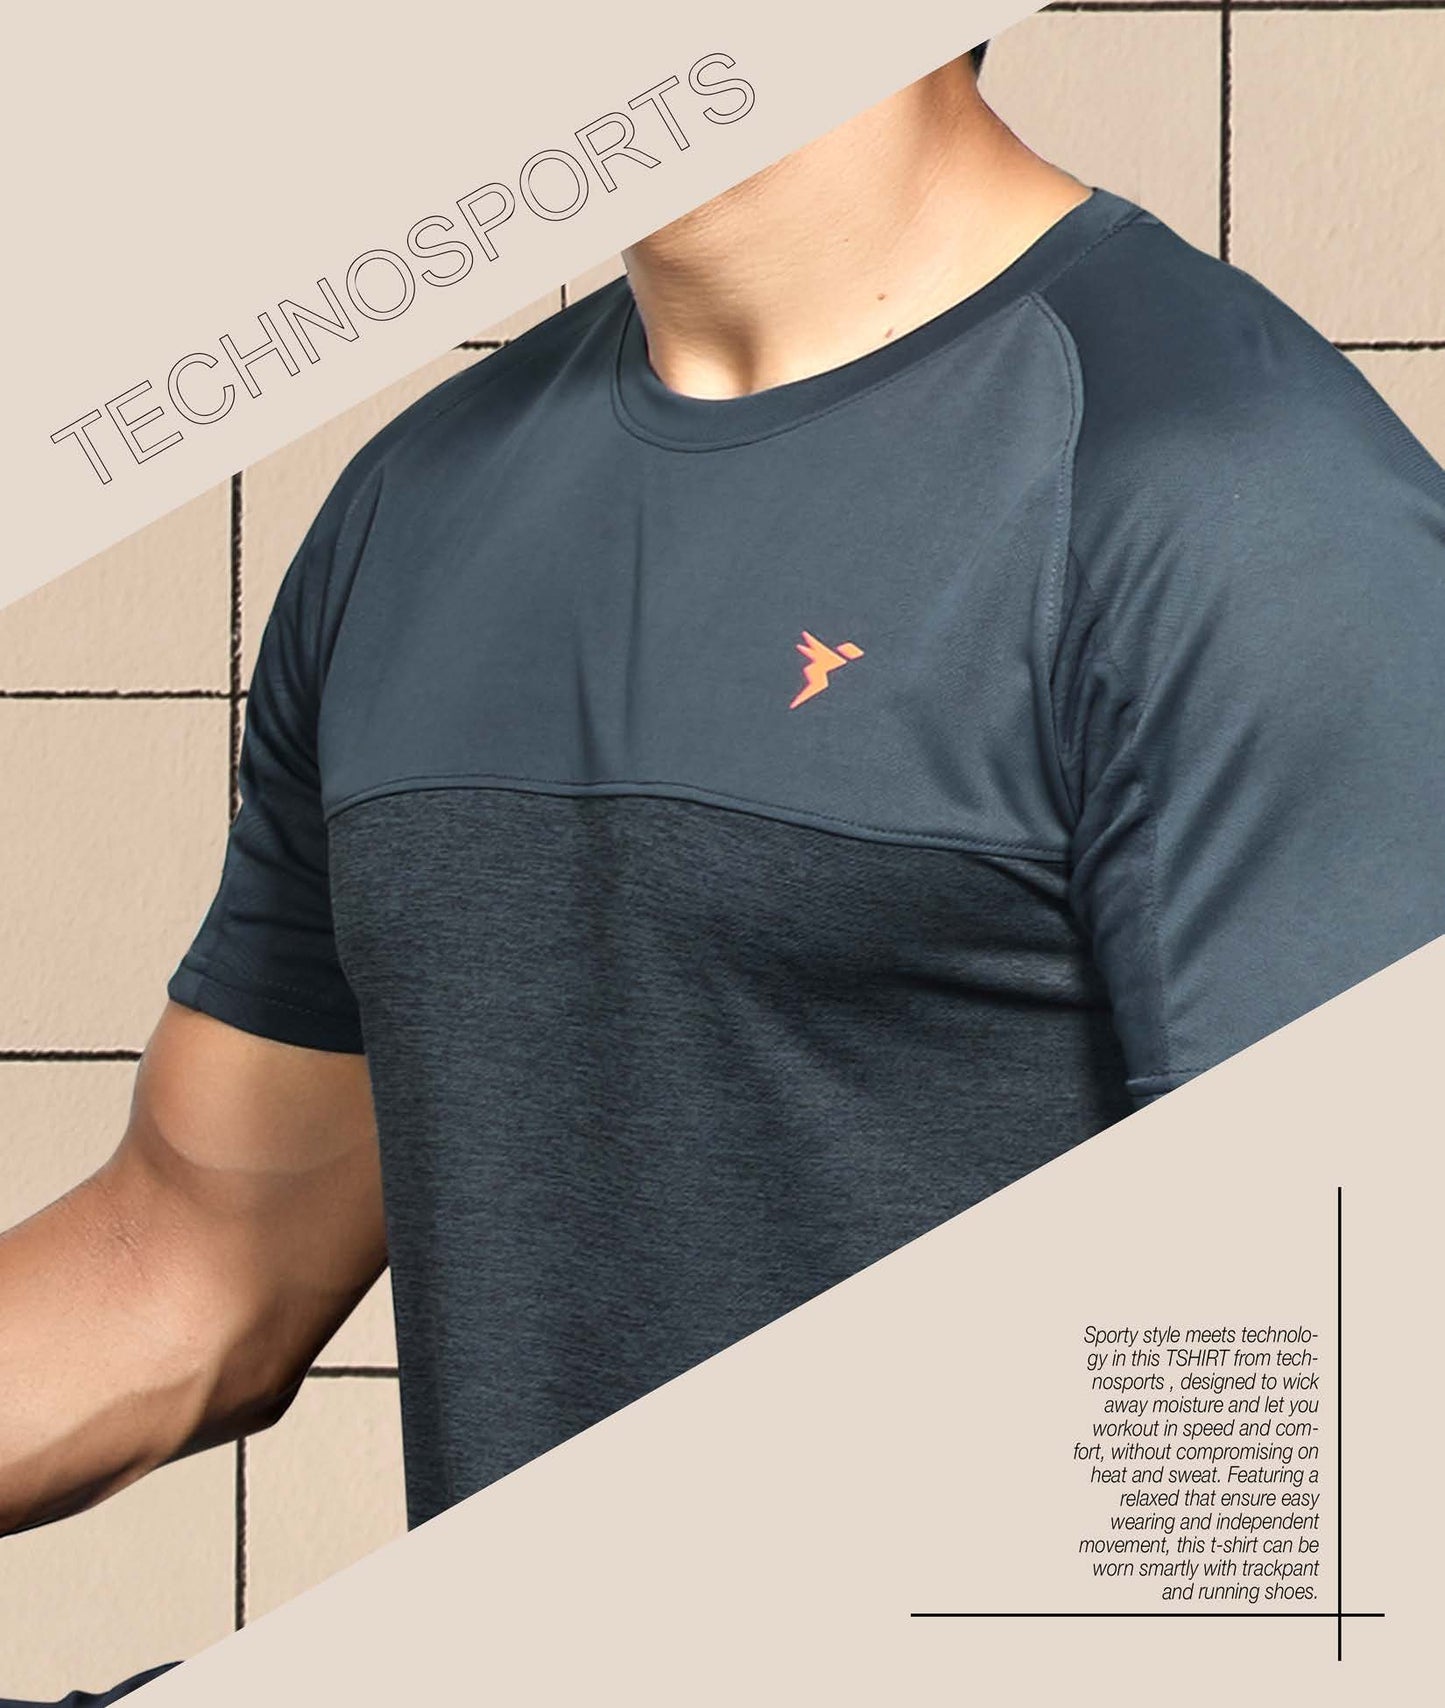 TechnoSport Crew Neck Half Sleeve Dry Fit T Shirt for Men P-516 (Dark Grey)